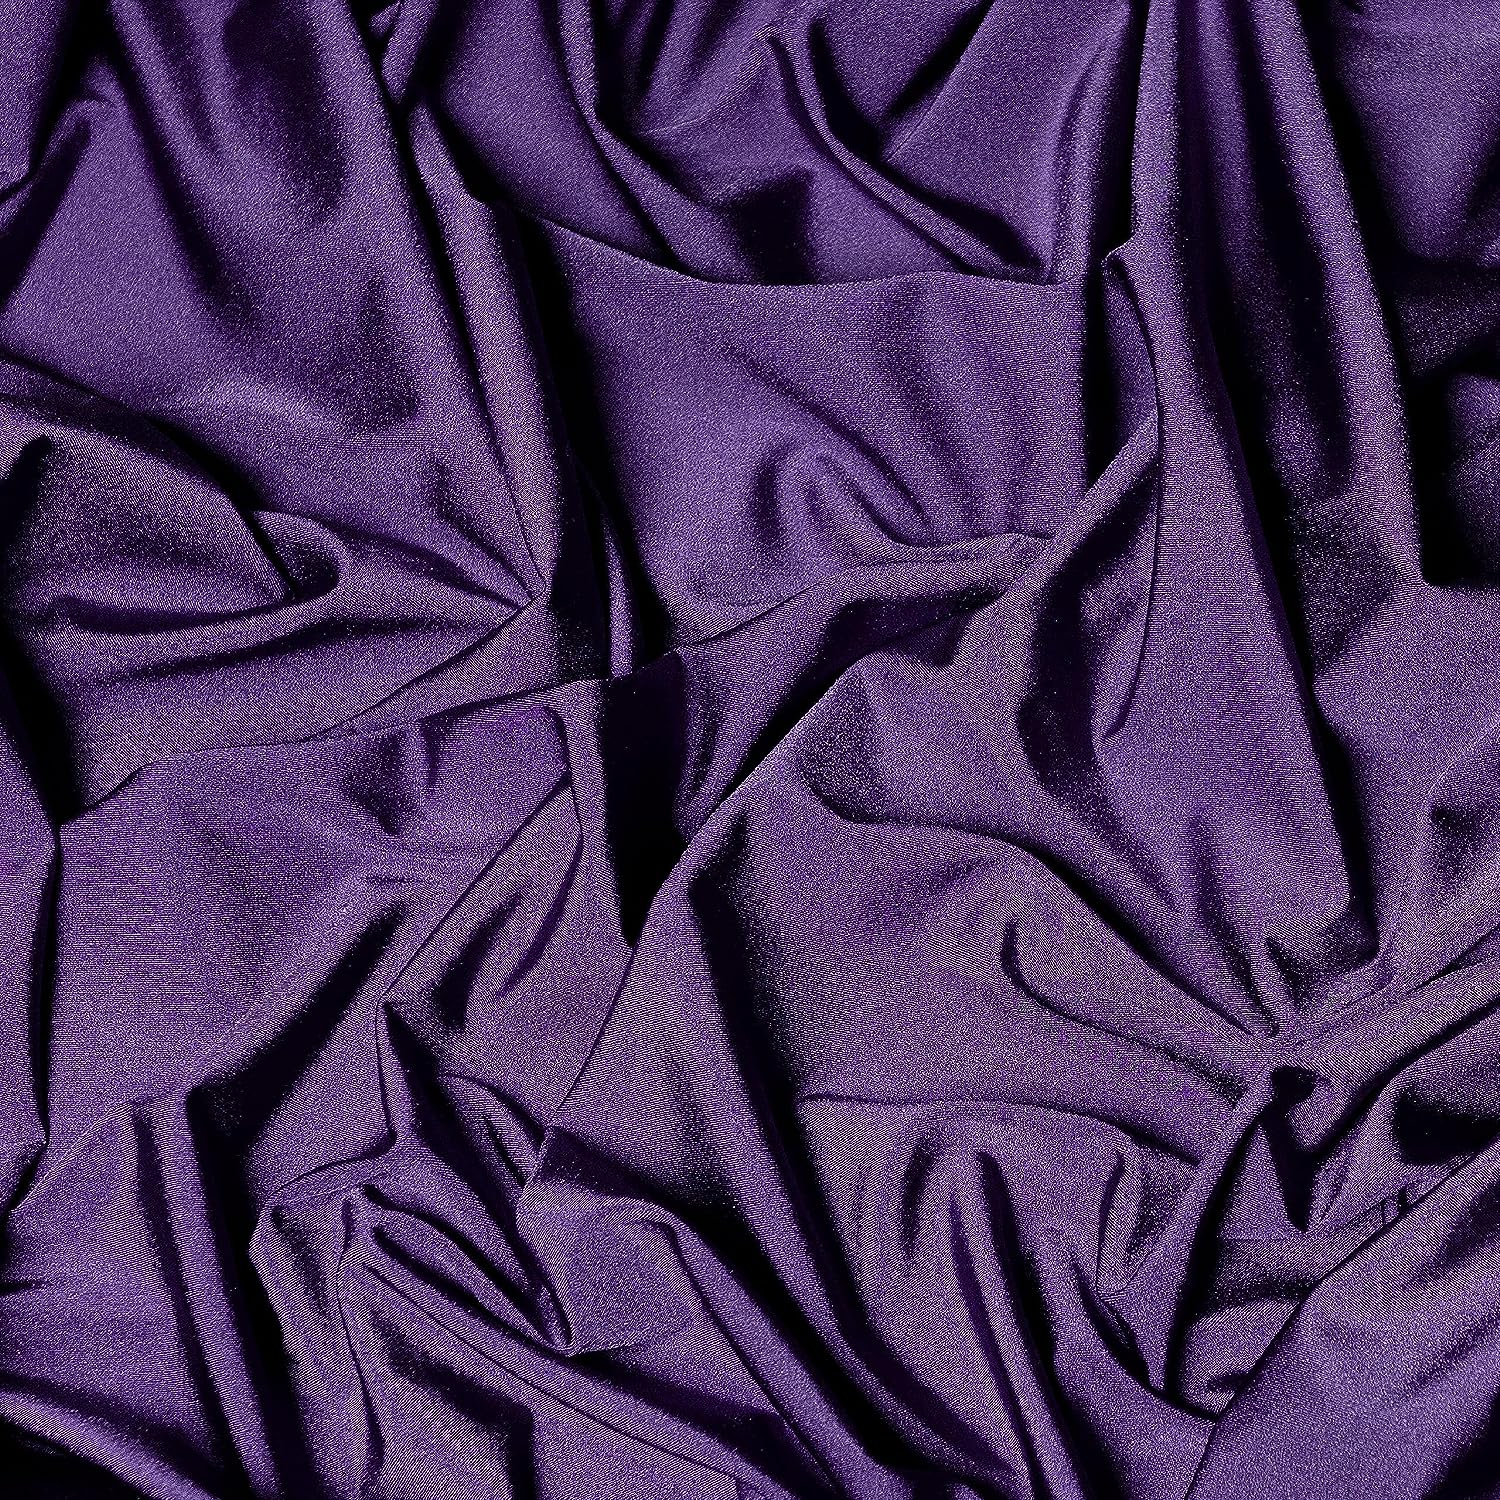 Purple Luxury Nylon Spandex Fabric By The YardICE FABRICSICE FABRICSBy The Yard (58" Width)Purple Luxury Nylon Spandex Fabric By The Yard ICE FABRICS